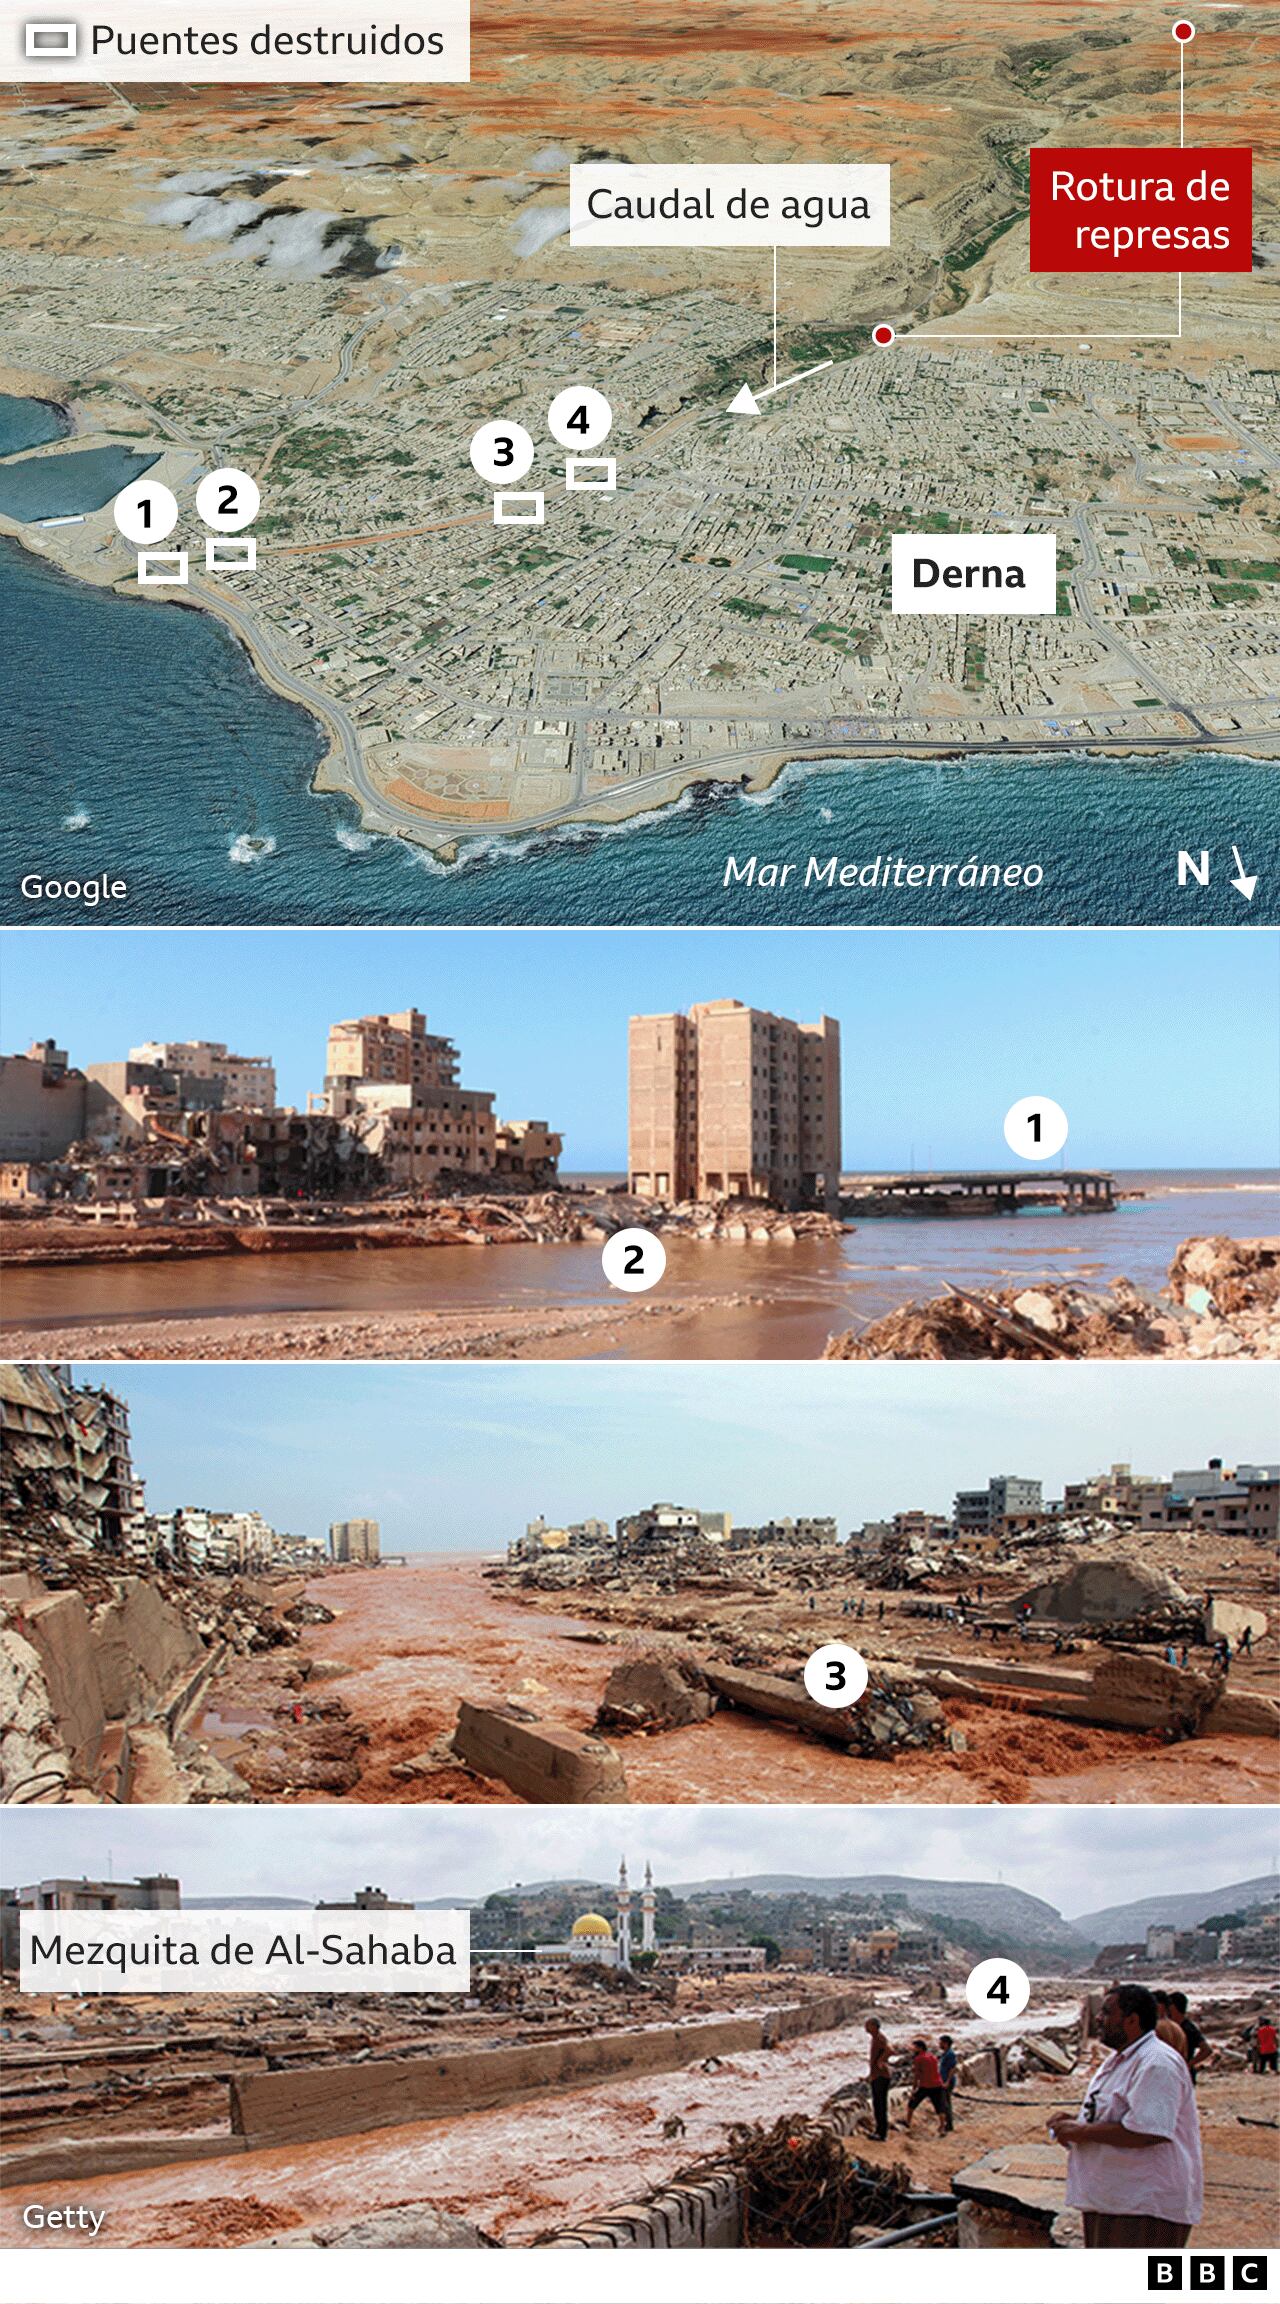 Graphics showing destruction in Libya